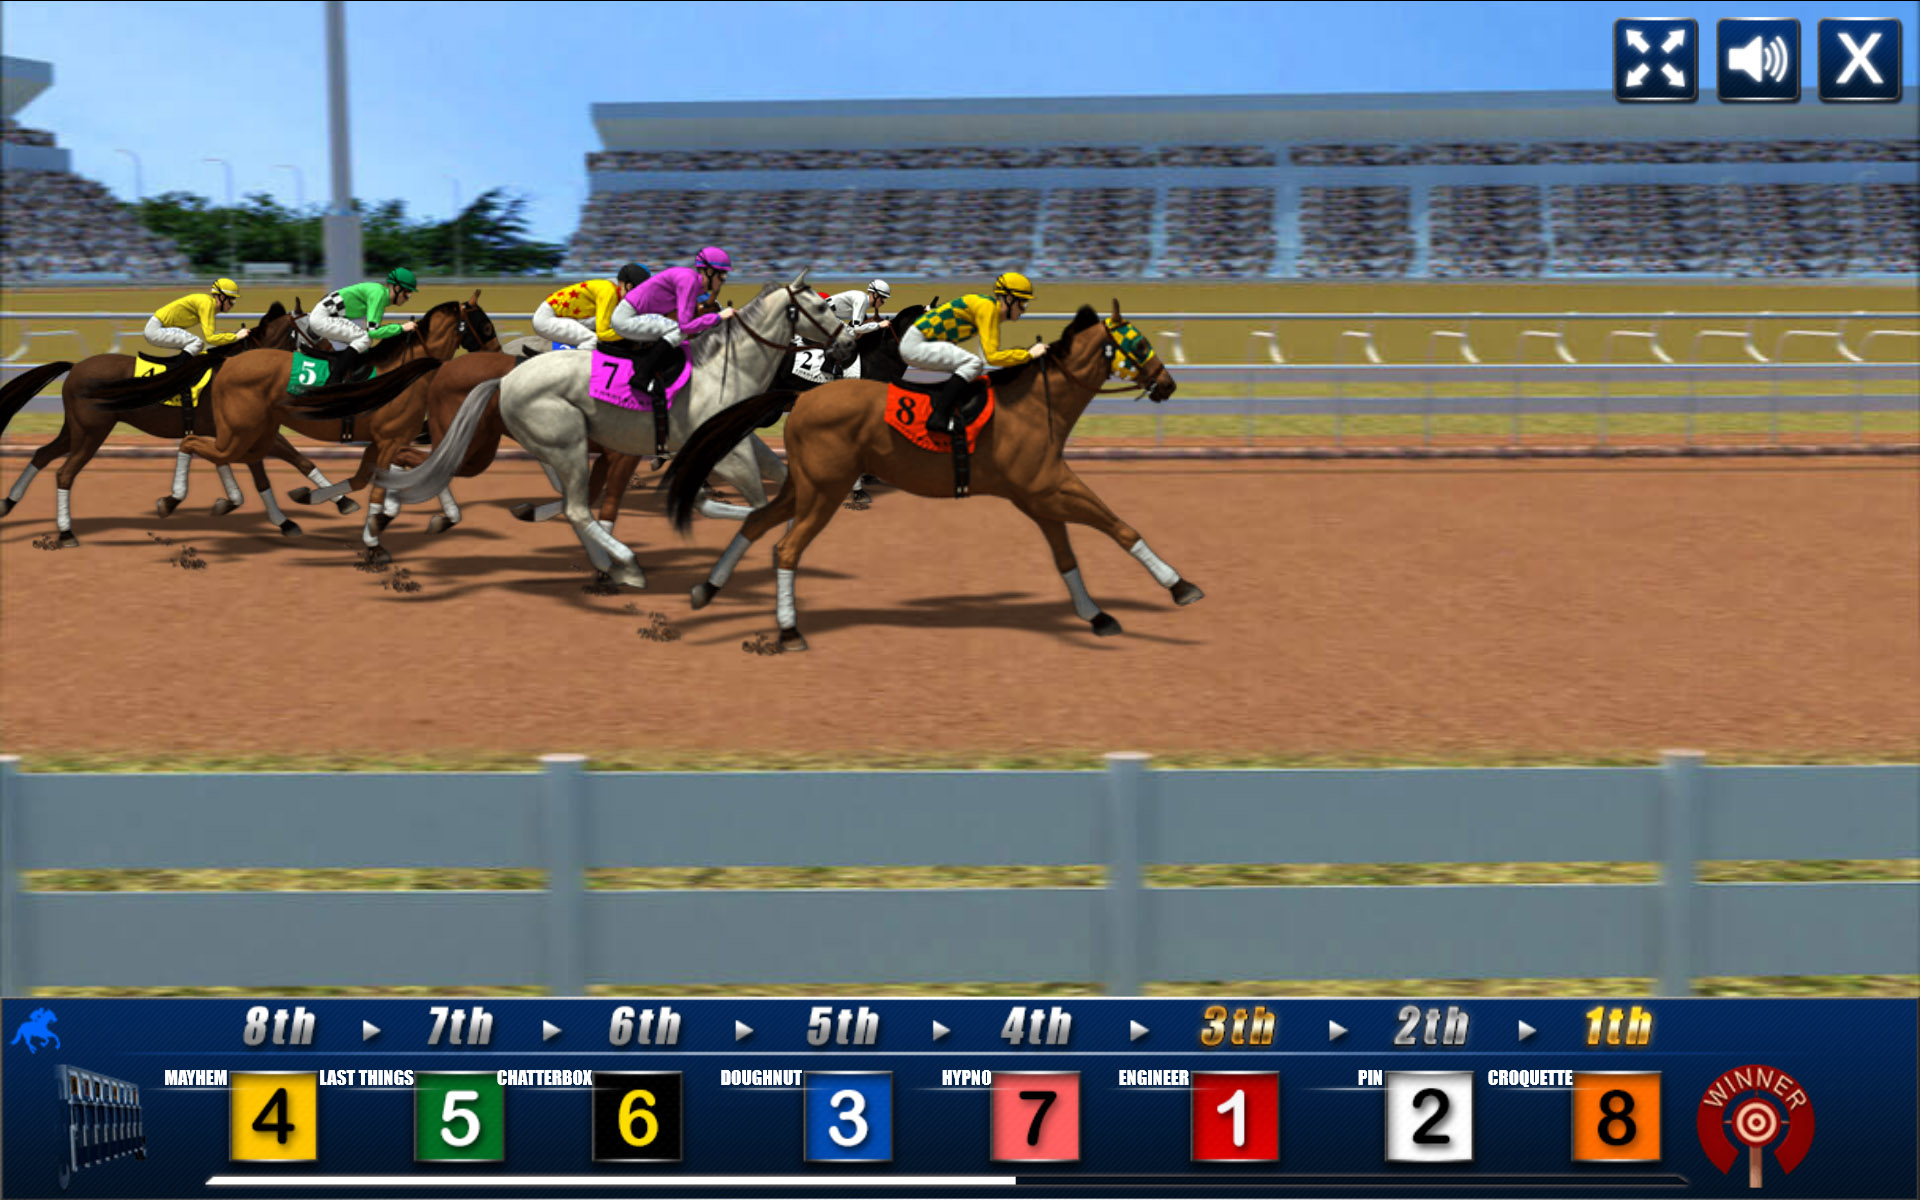 B spot real money online horse racing casino games